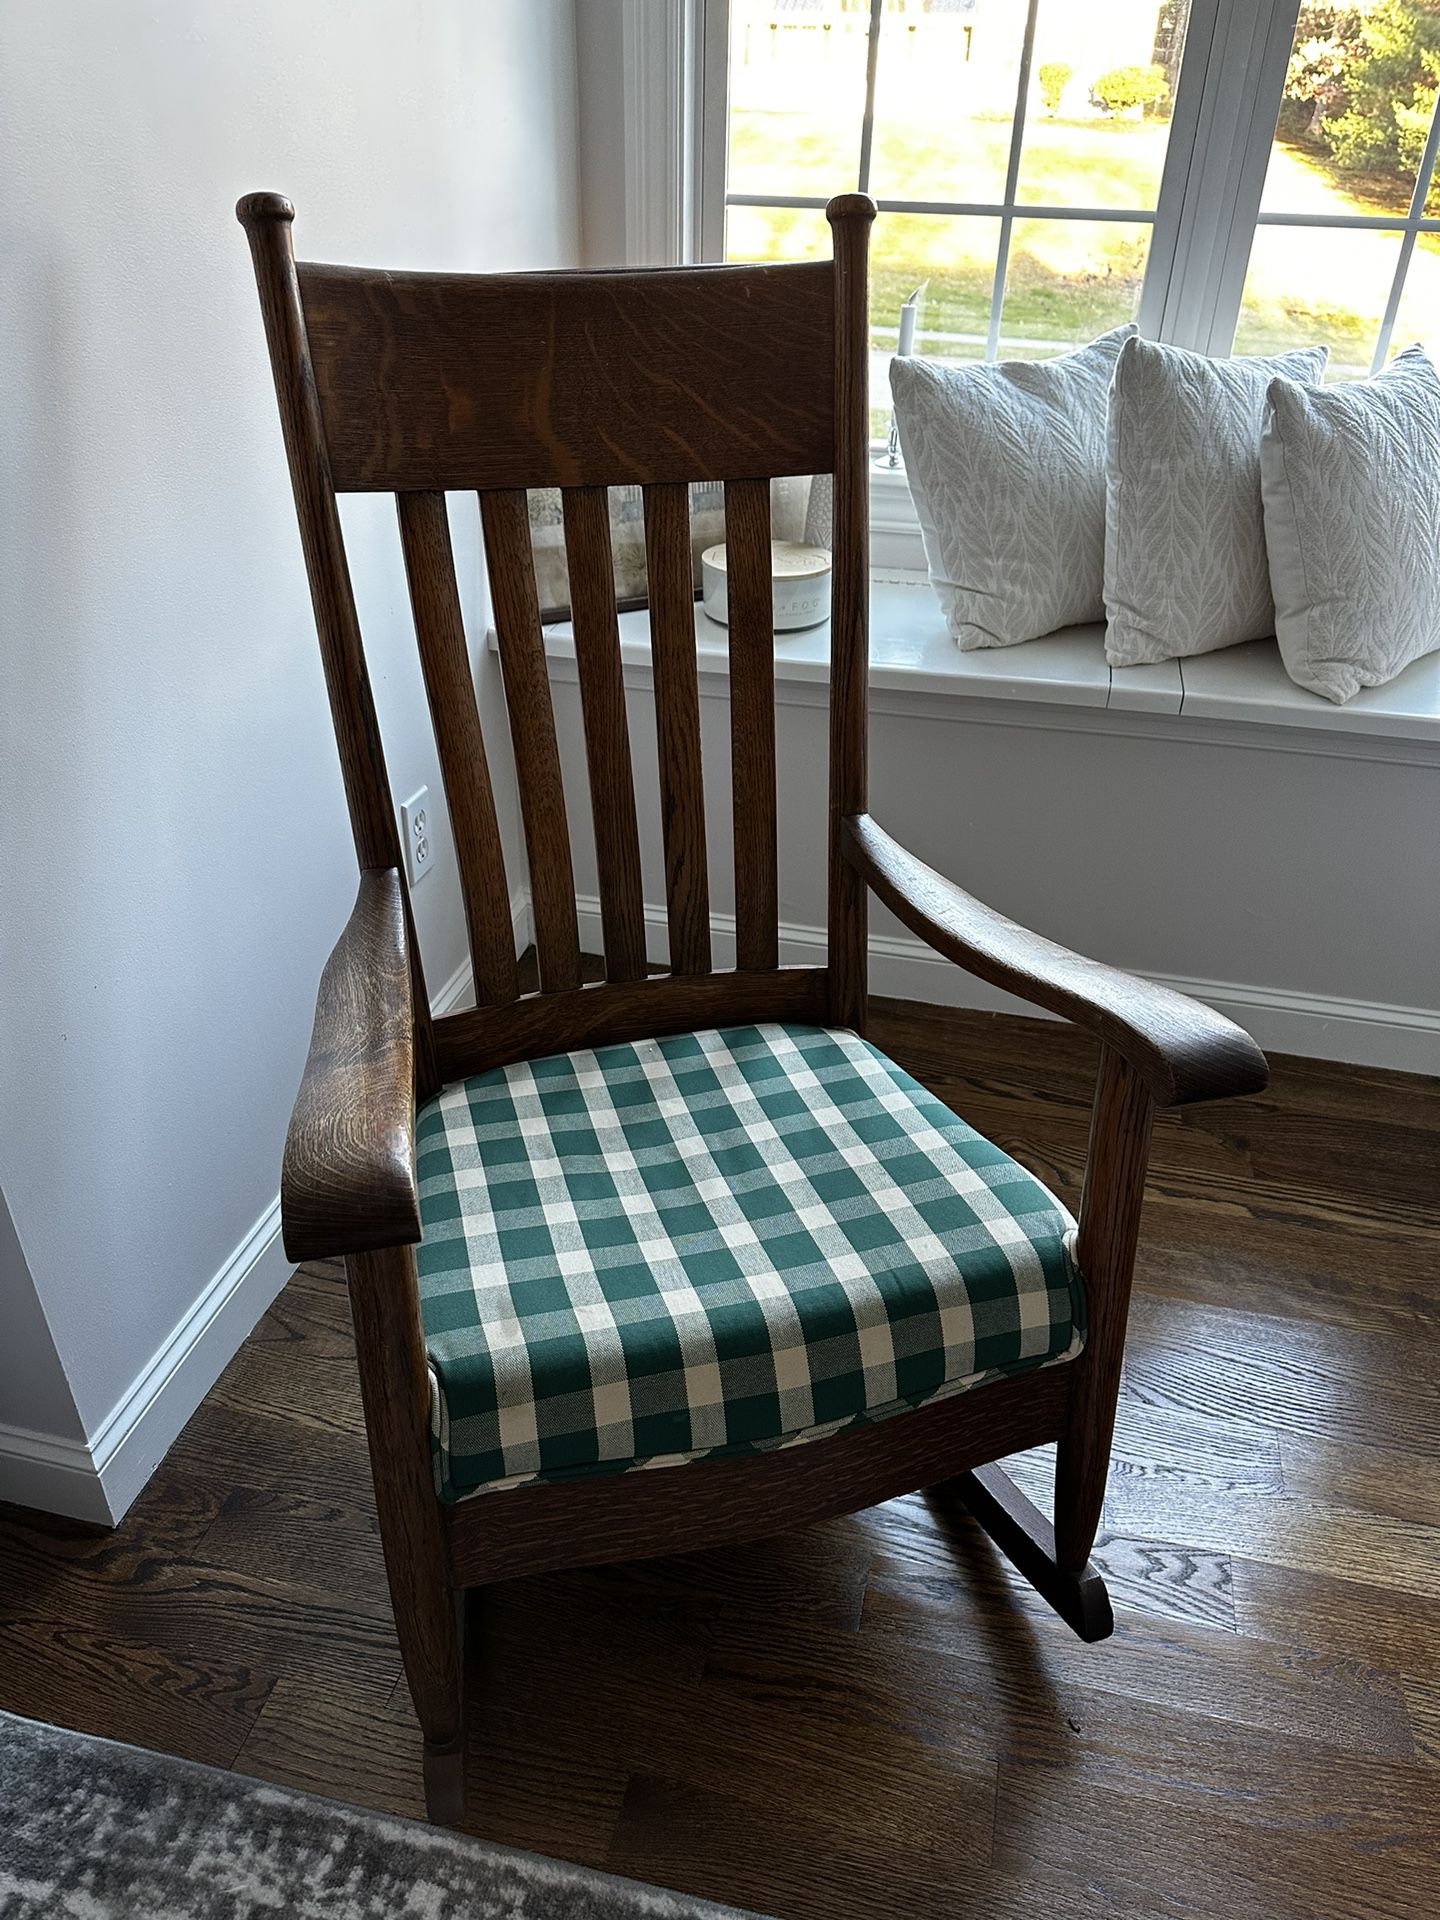 Solid Oak Rocking Chair